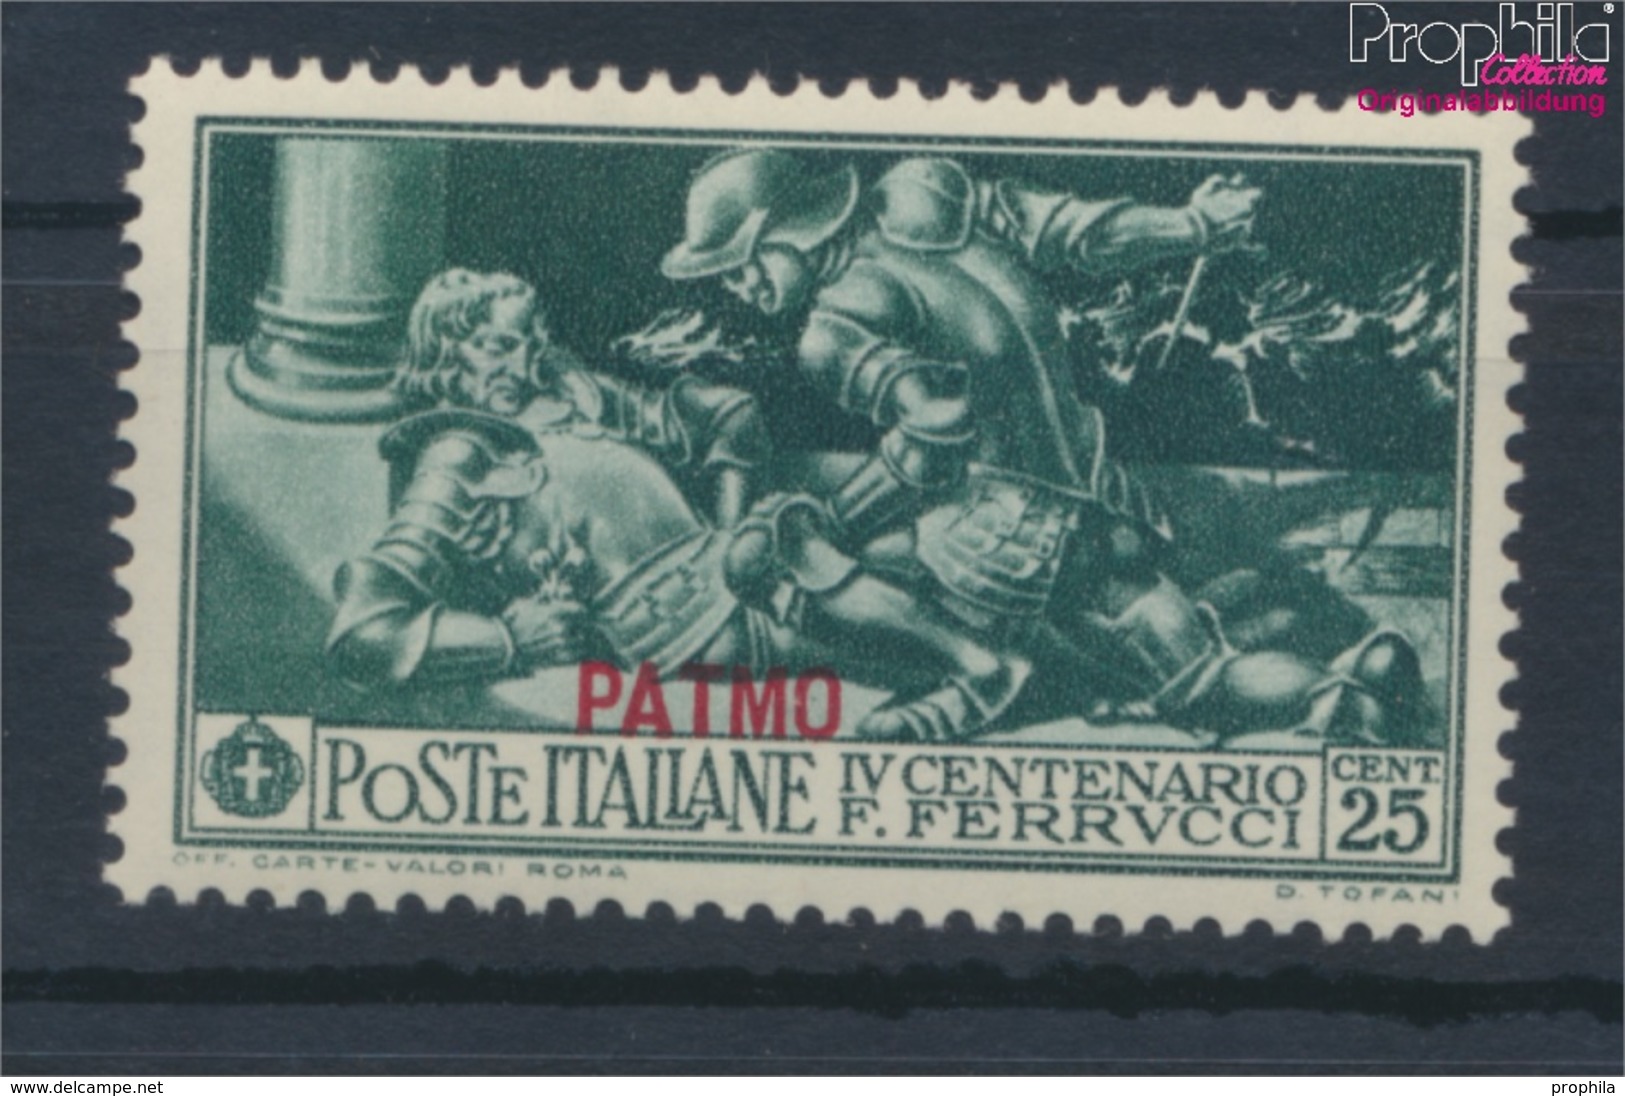 Ägäische Inseln 27VIII Postfrisch 1930 Ferrucci Aufdruckausgabe Patmo (9465480 - Egée (Patmo)